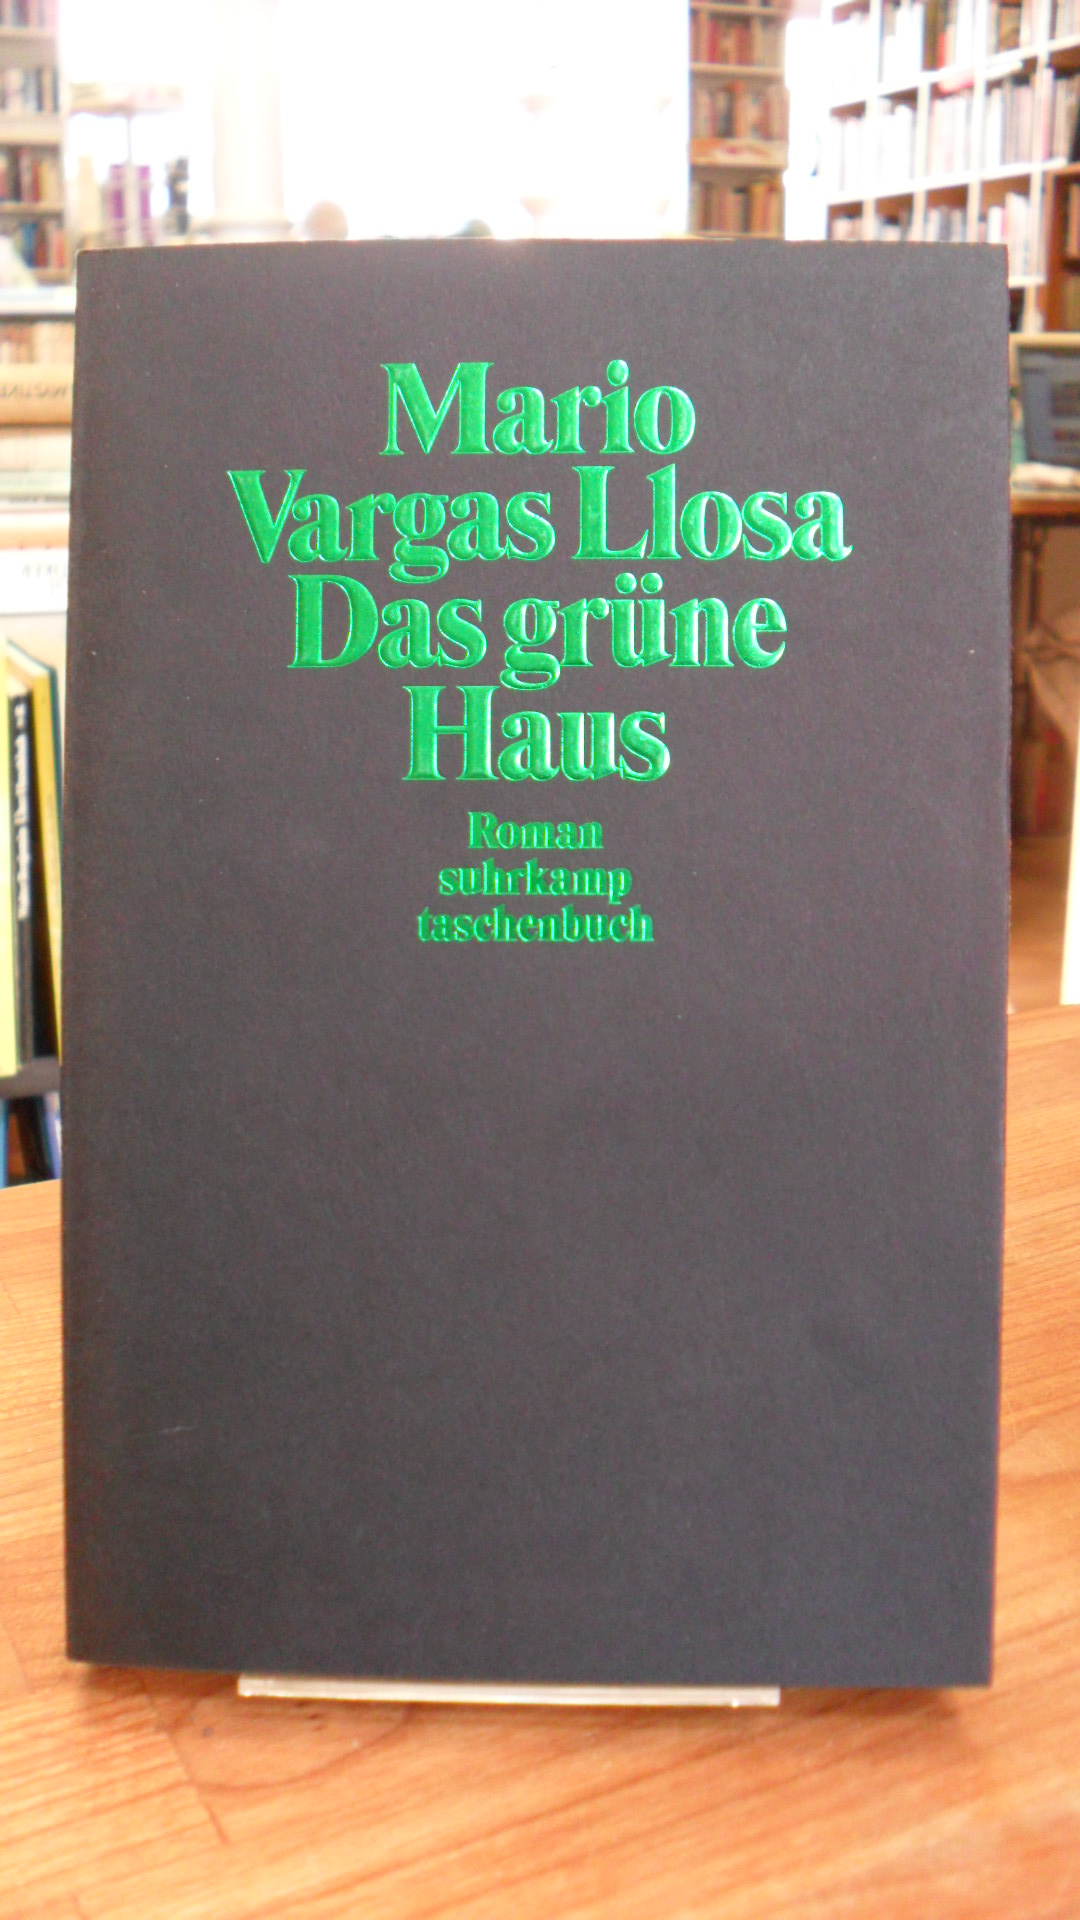 Vargas Llosa, Das grüne Haus – Roman,